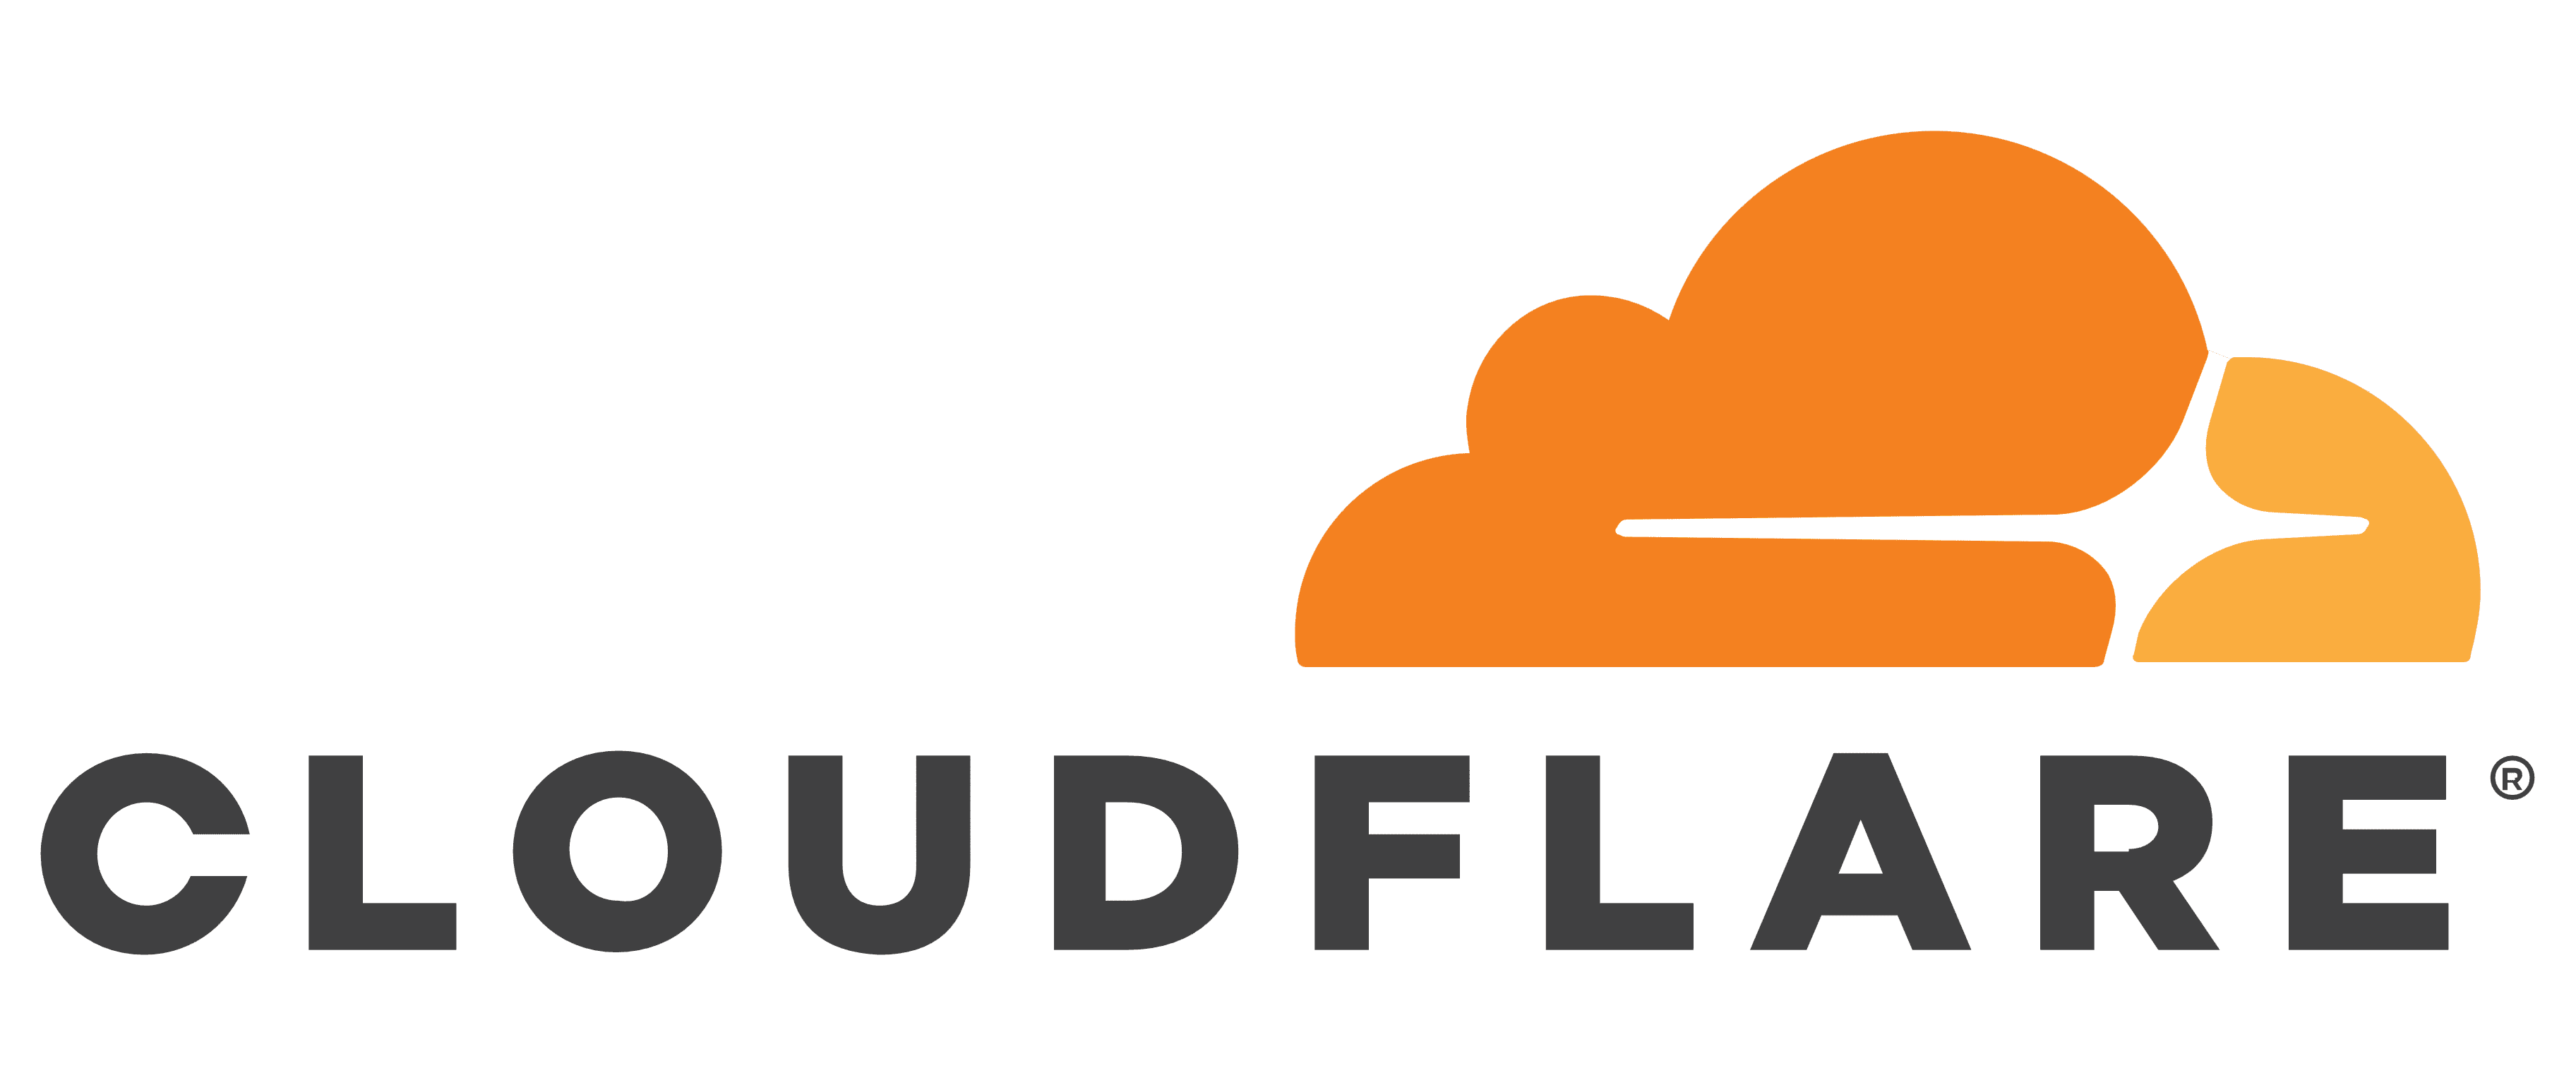 CloudflareをCloudflare Oneで保護
